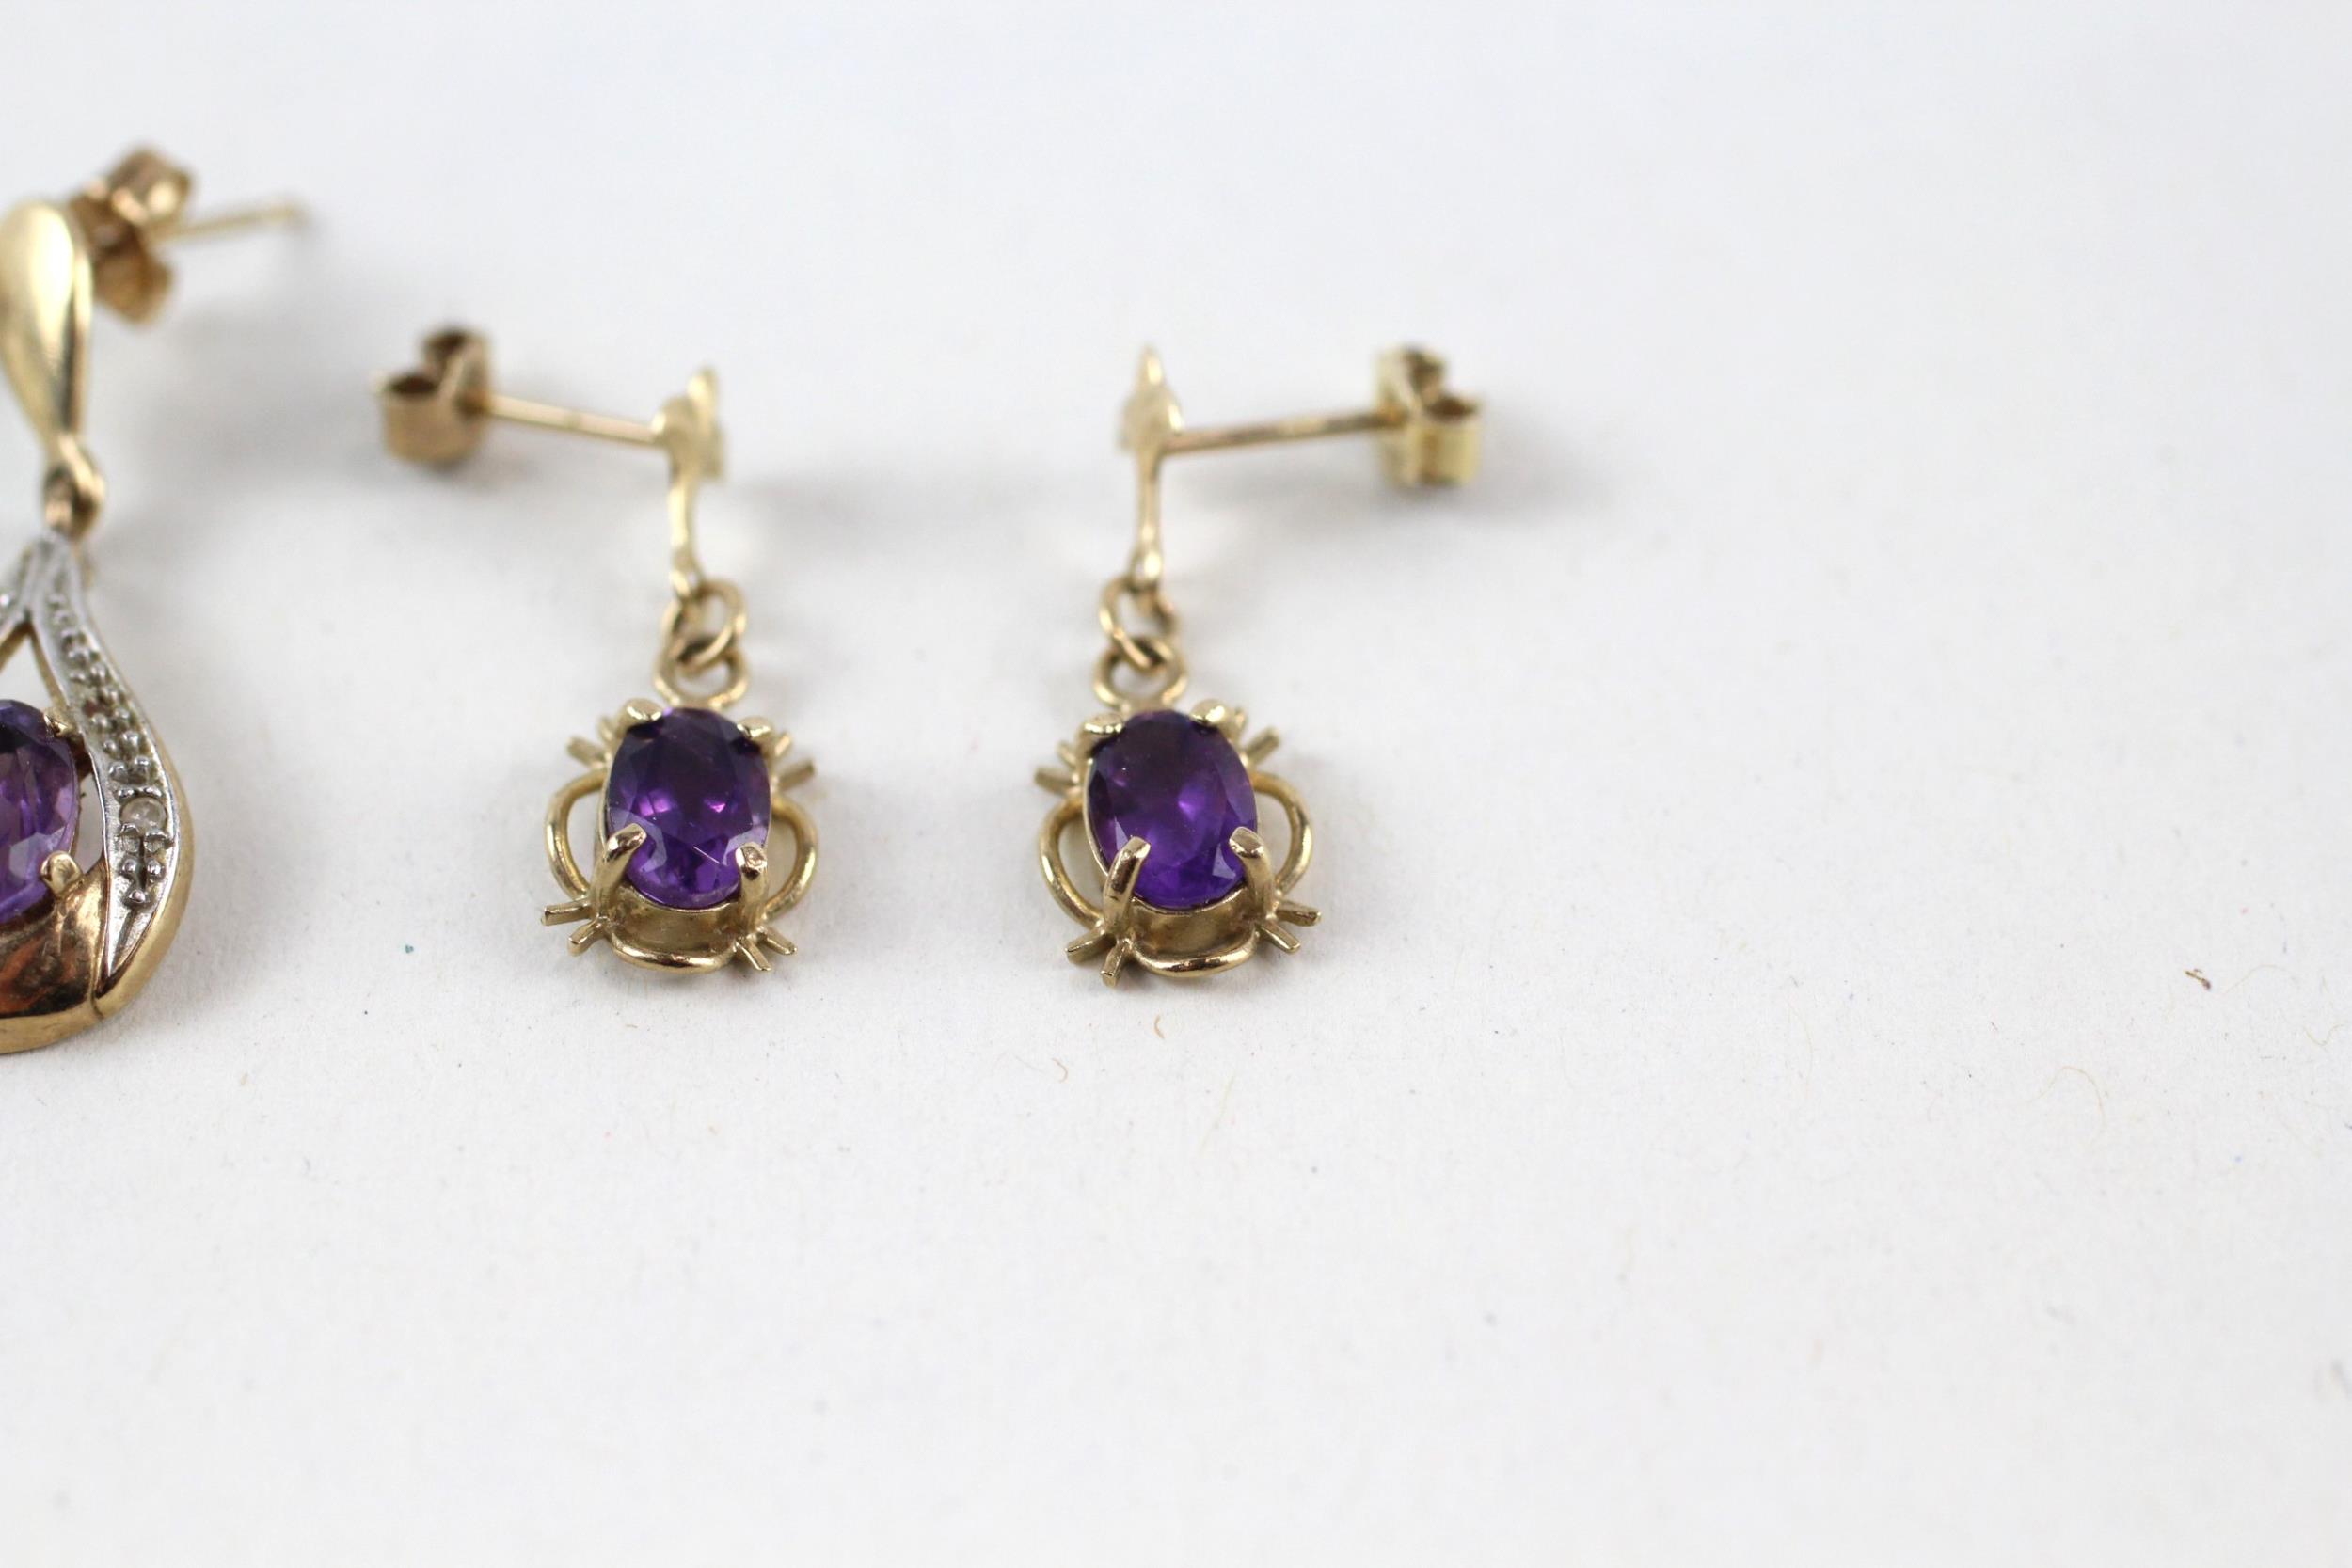 2x 9ct gold amethyst & diamond drop earrings (3g) - Image 5 of 5